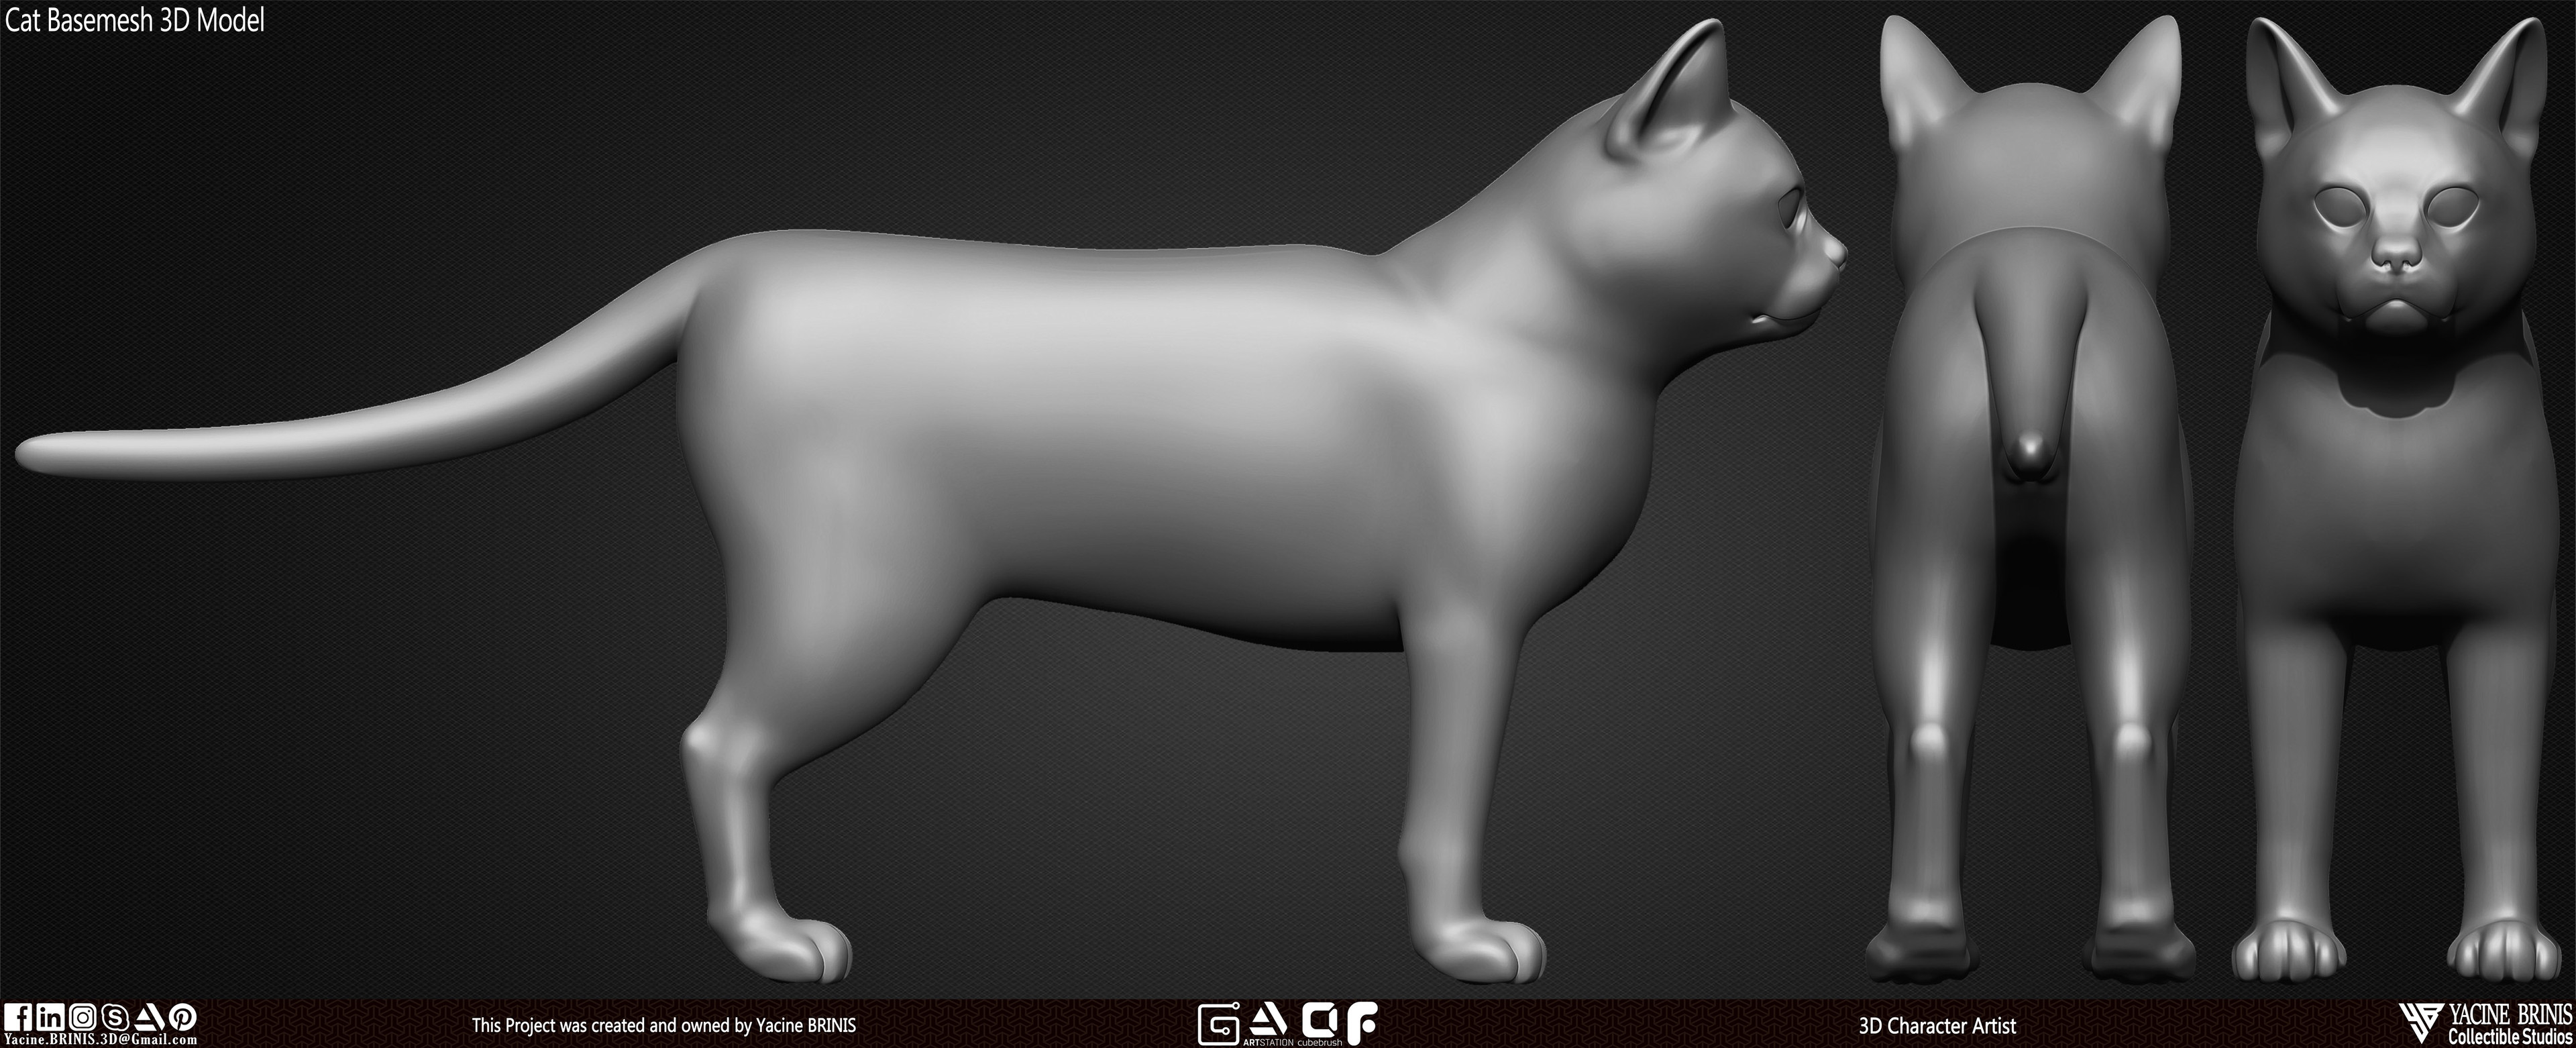 Cat Basemesh 3D Model sculpted By Yacine BRINIS set 005